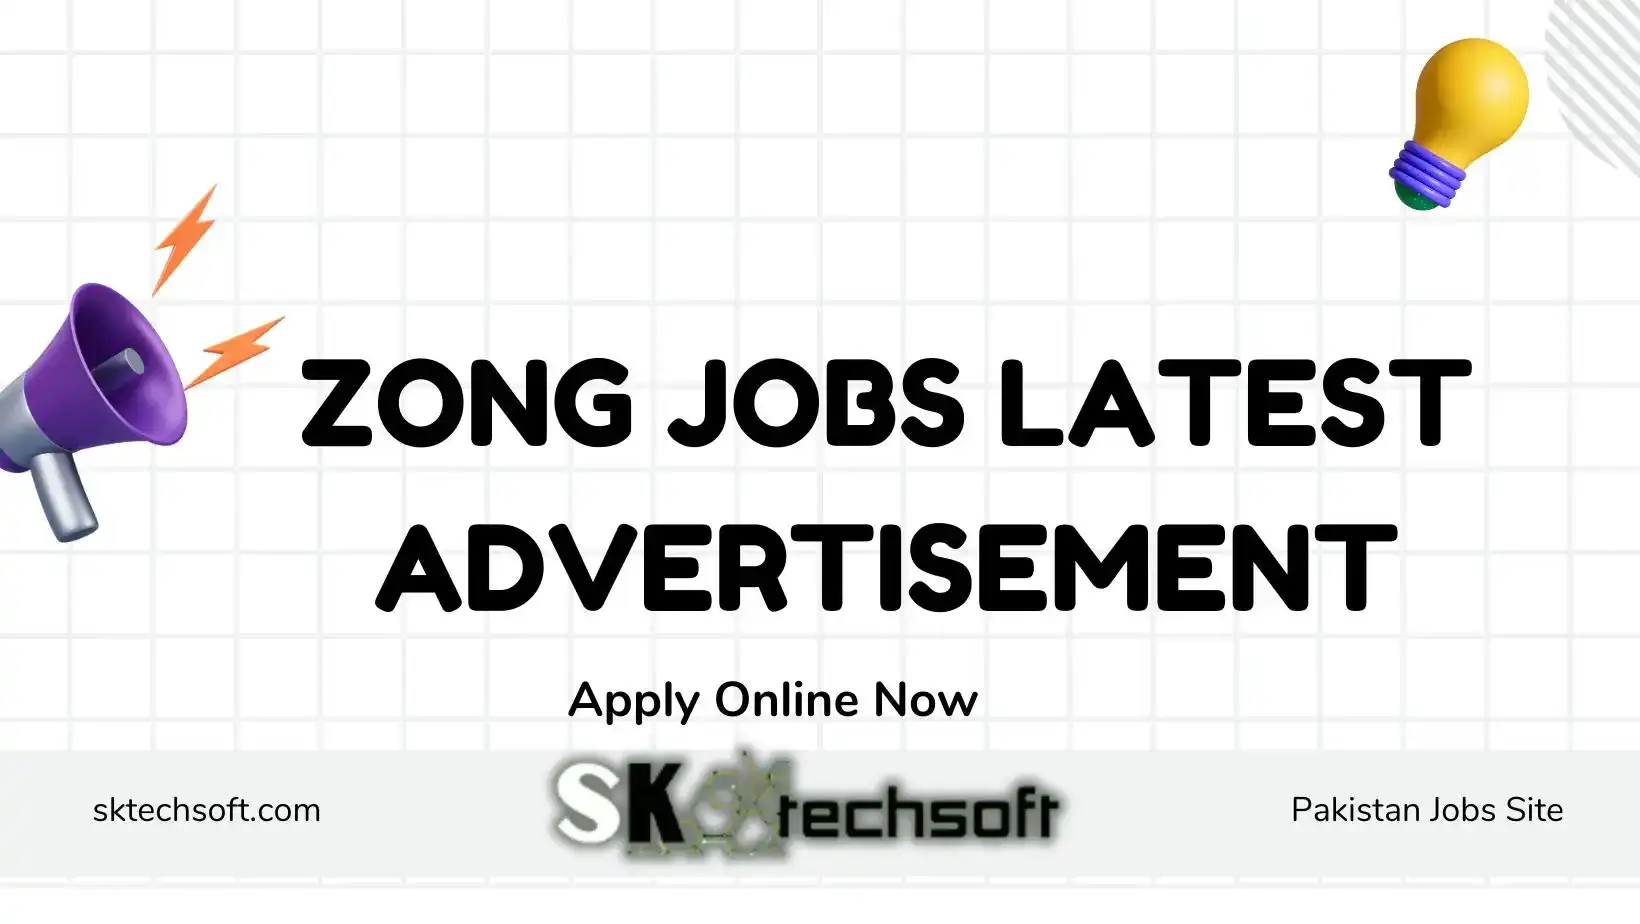 Zong Jobs Latest Advertisement